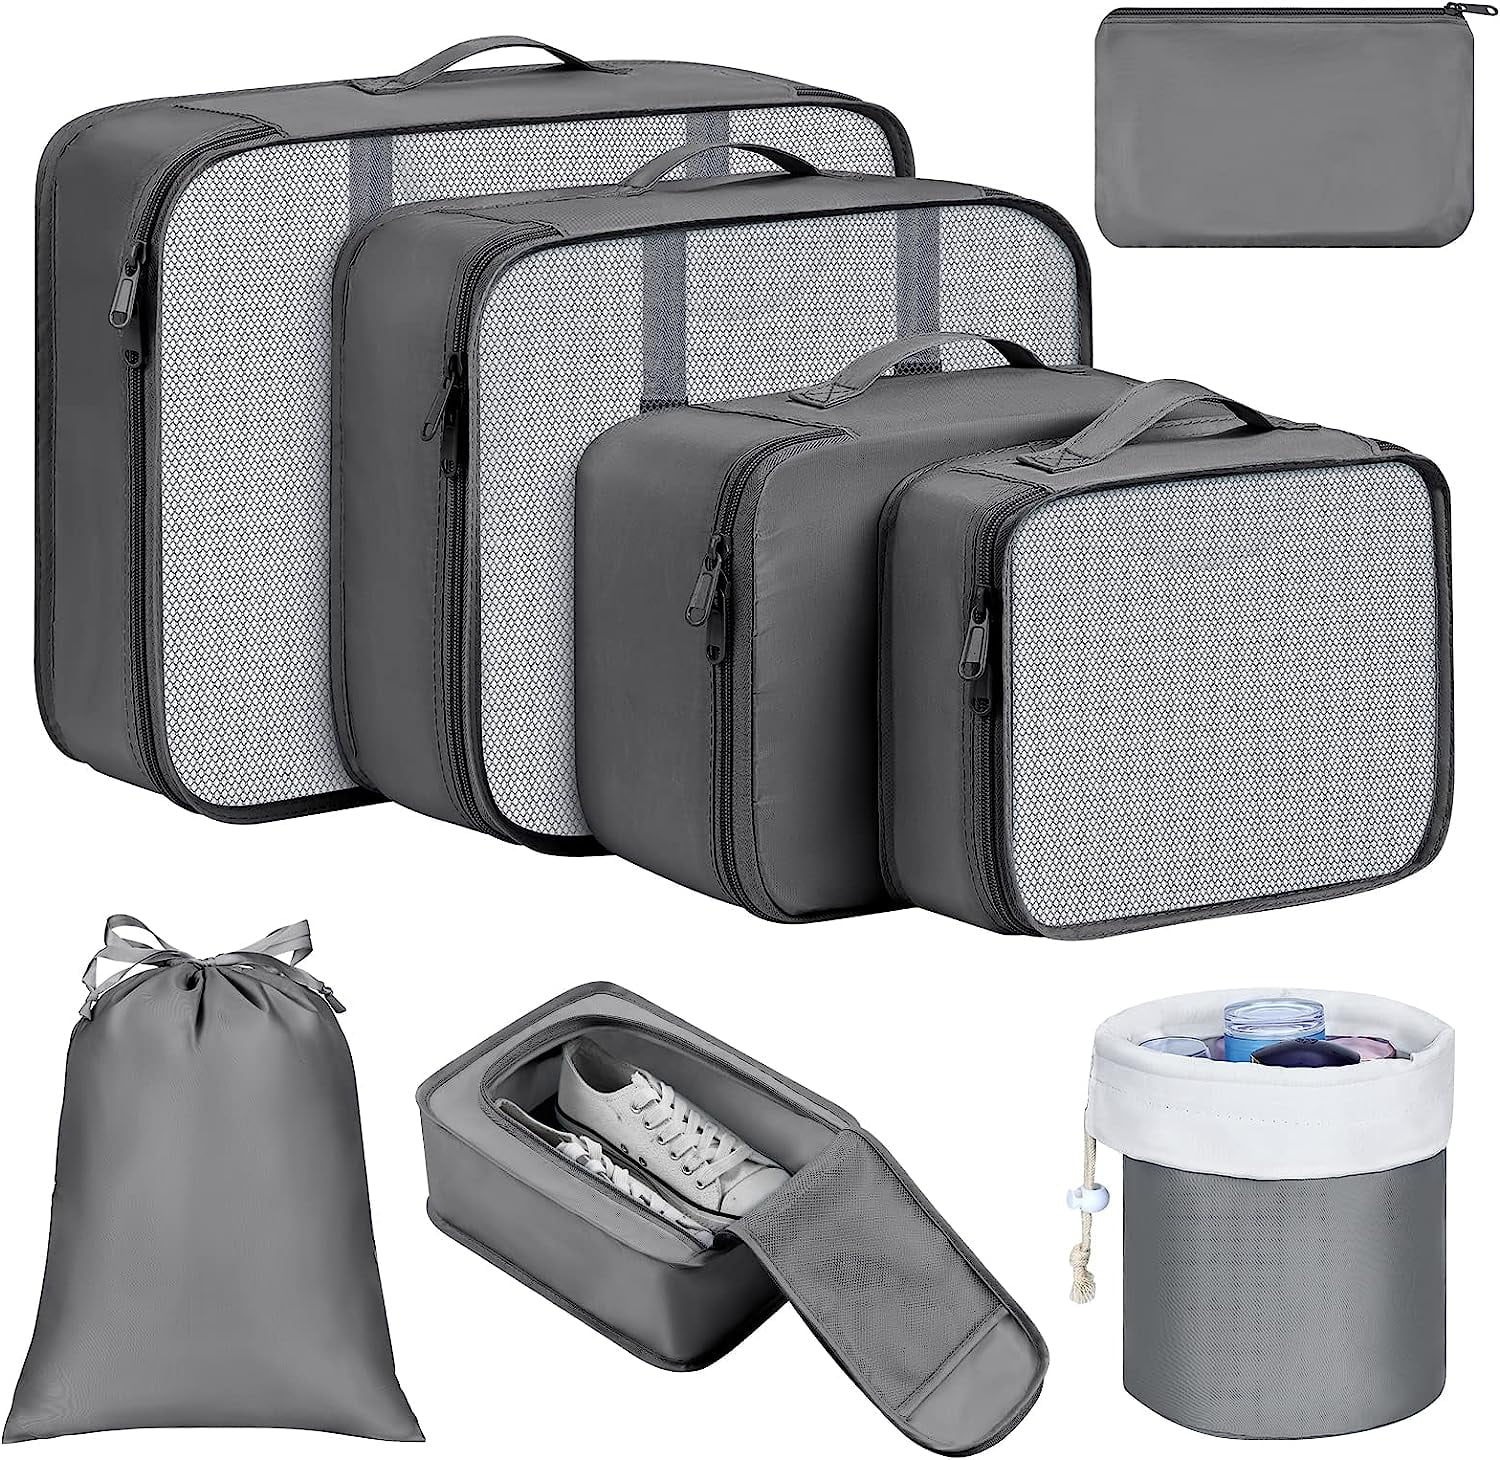 DIMJ - Organizer per valigia, cubici, da viaggio, set di 8, sacchetti Blu 1